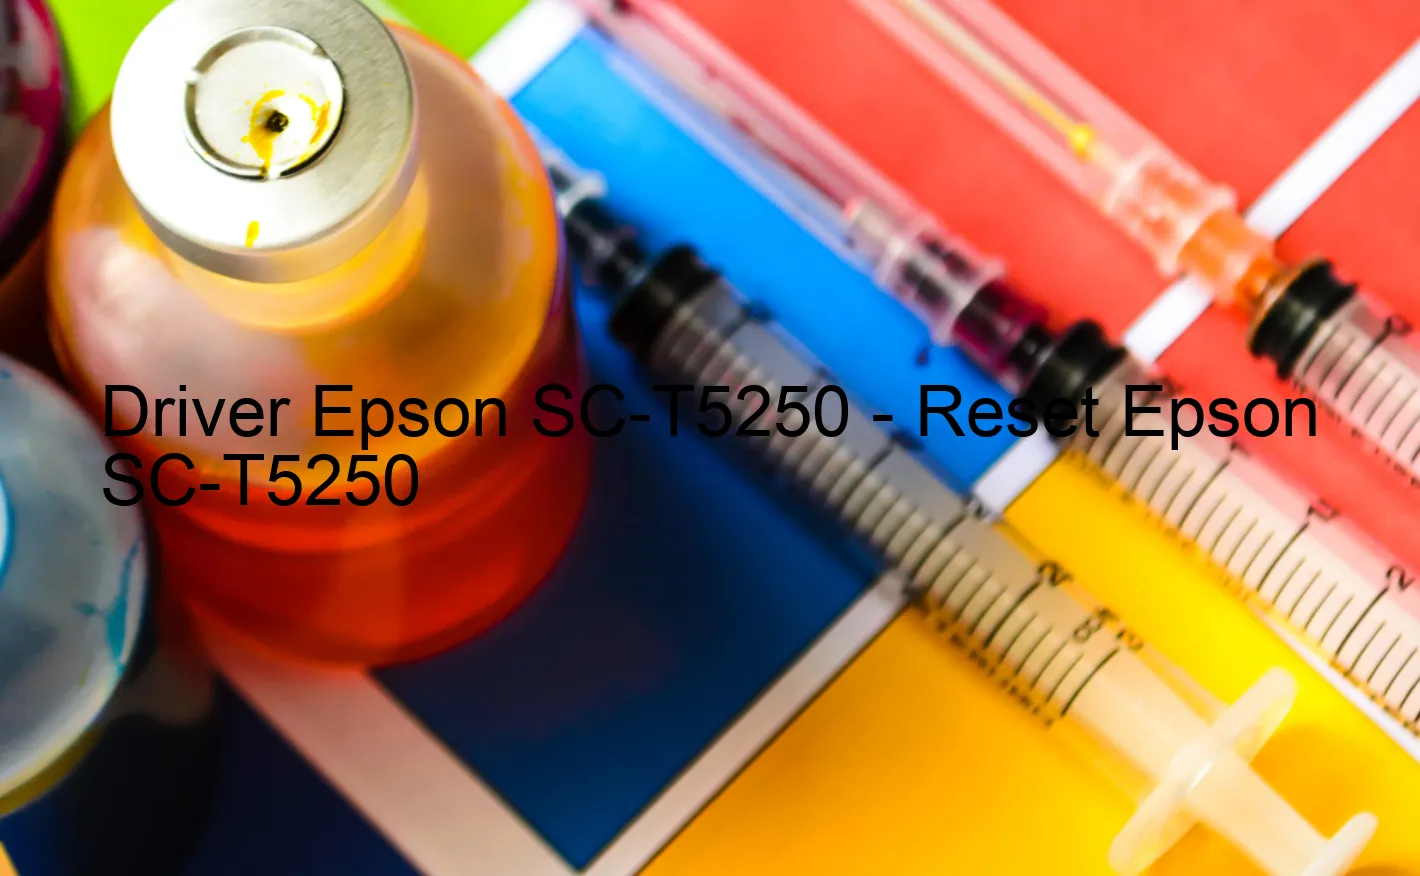 Epson SC-T5250のドライバー、Epson SC-T5250のリセットソフトウェア